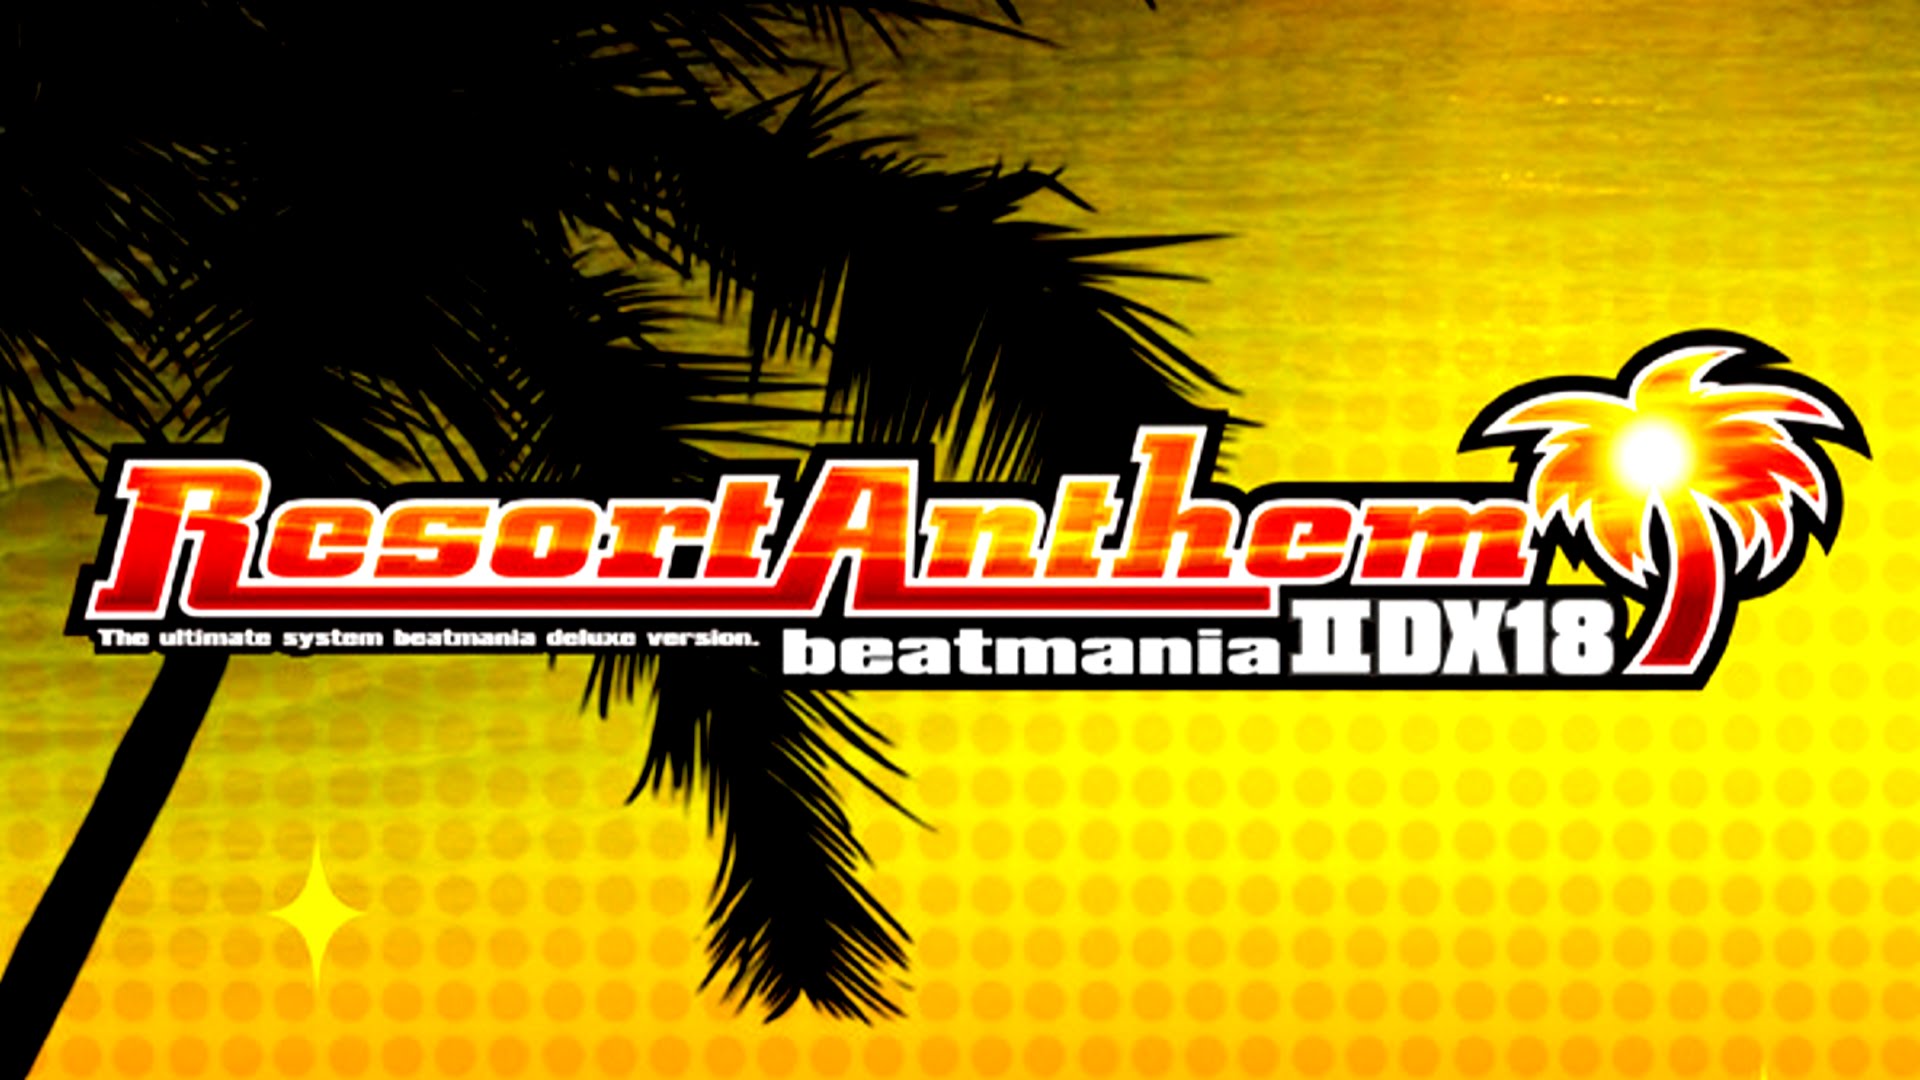 Mermaid girl (CD Version) - beatmania IIDX 18 Resort Anthem 